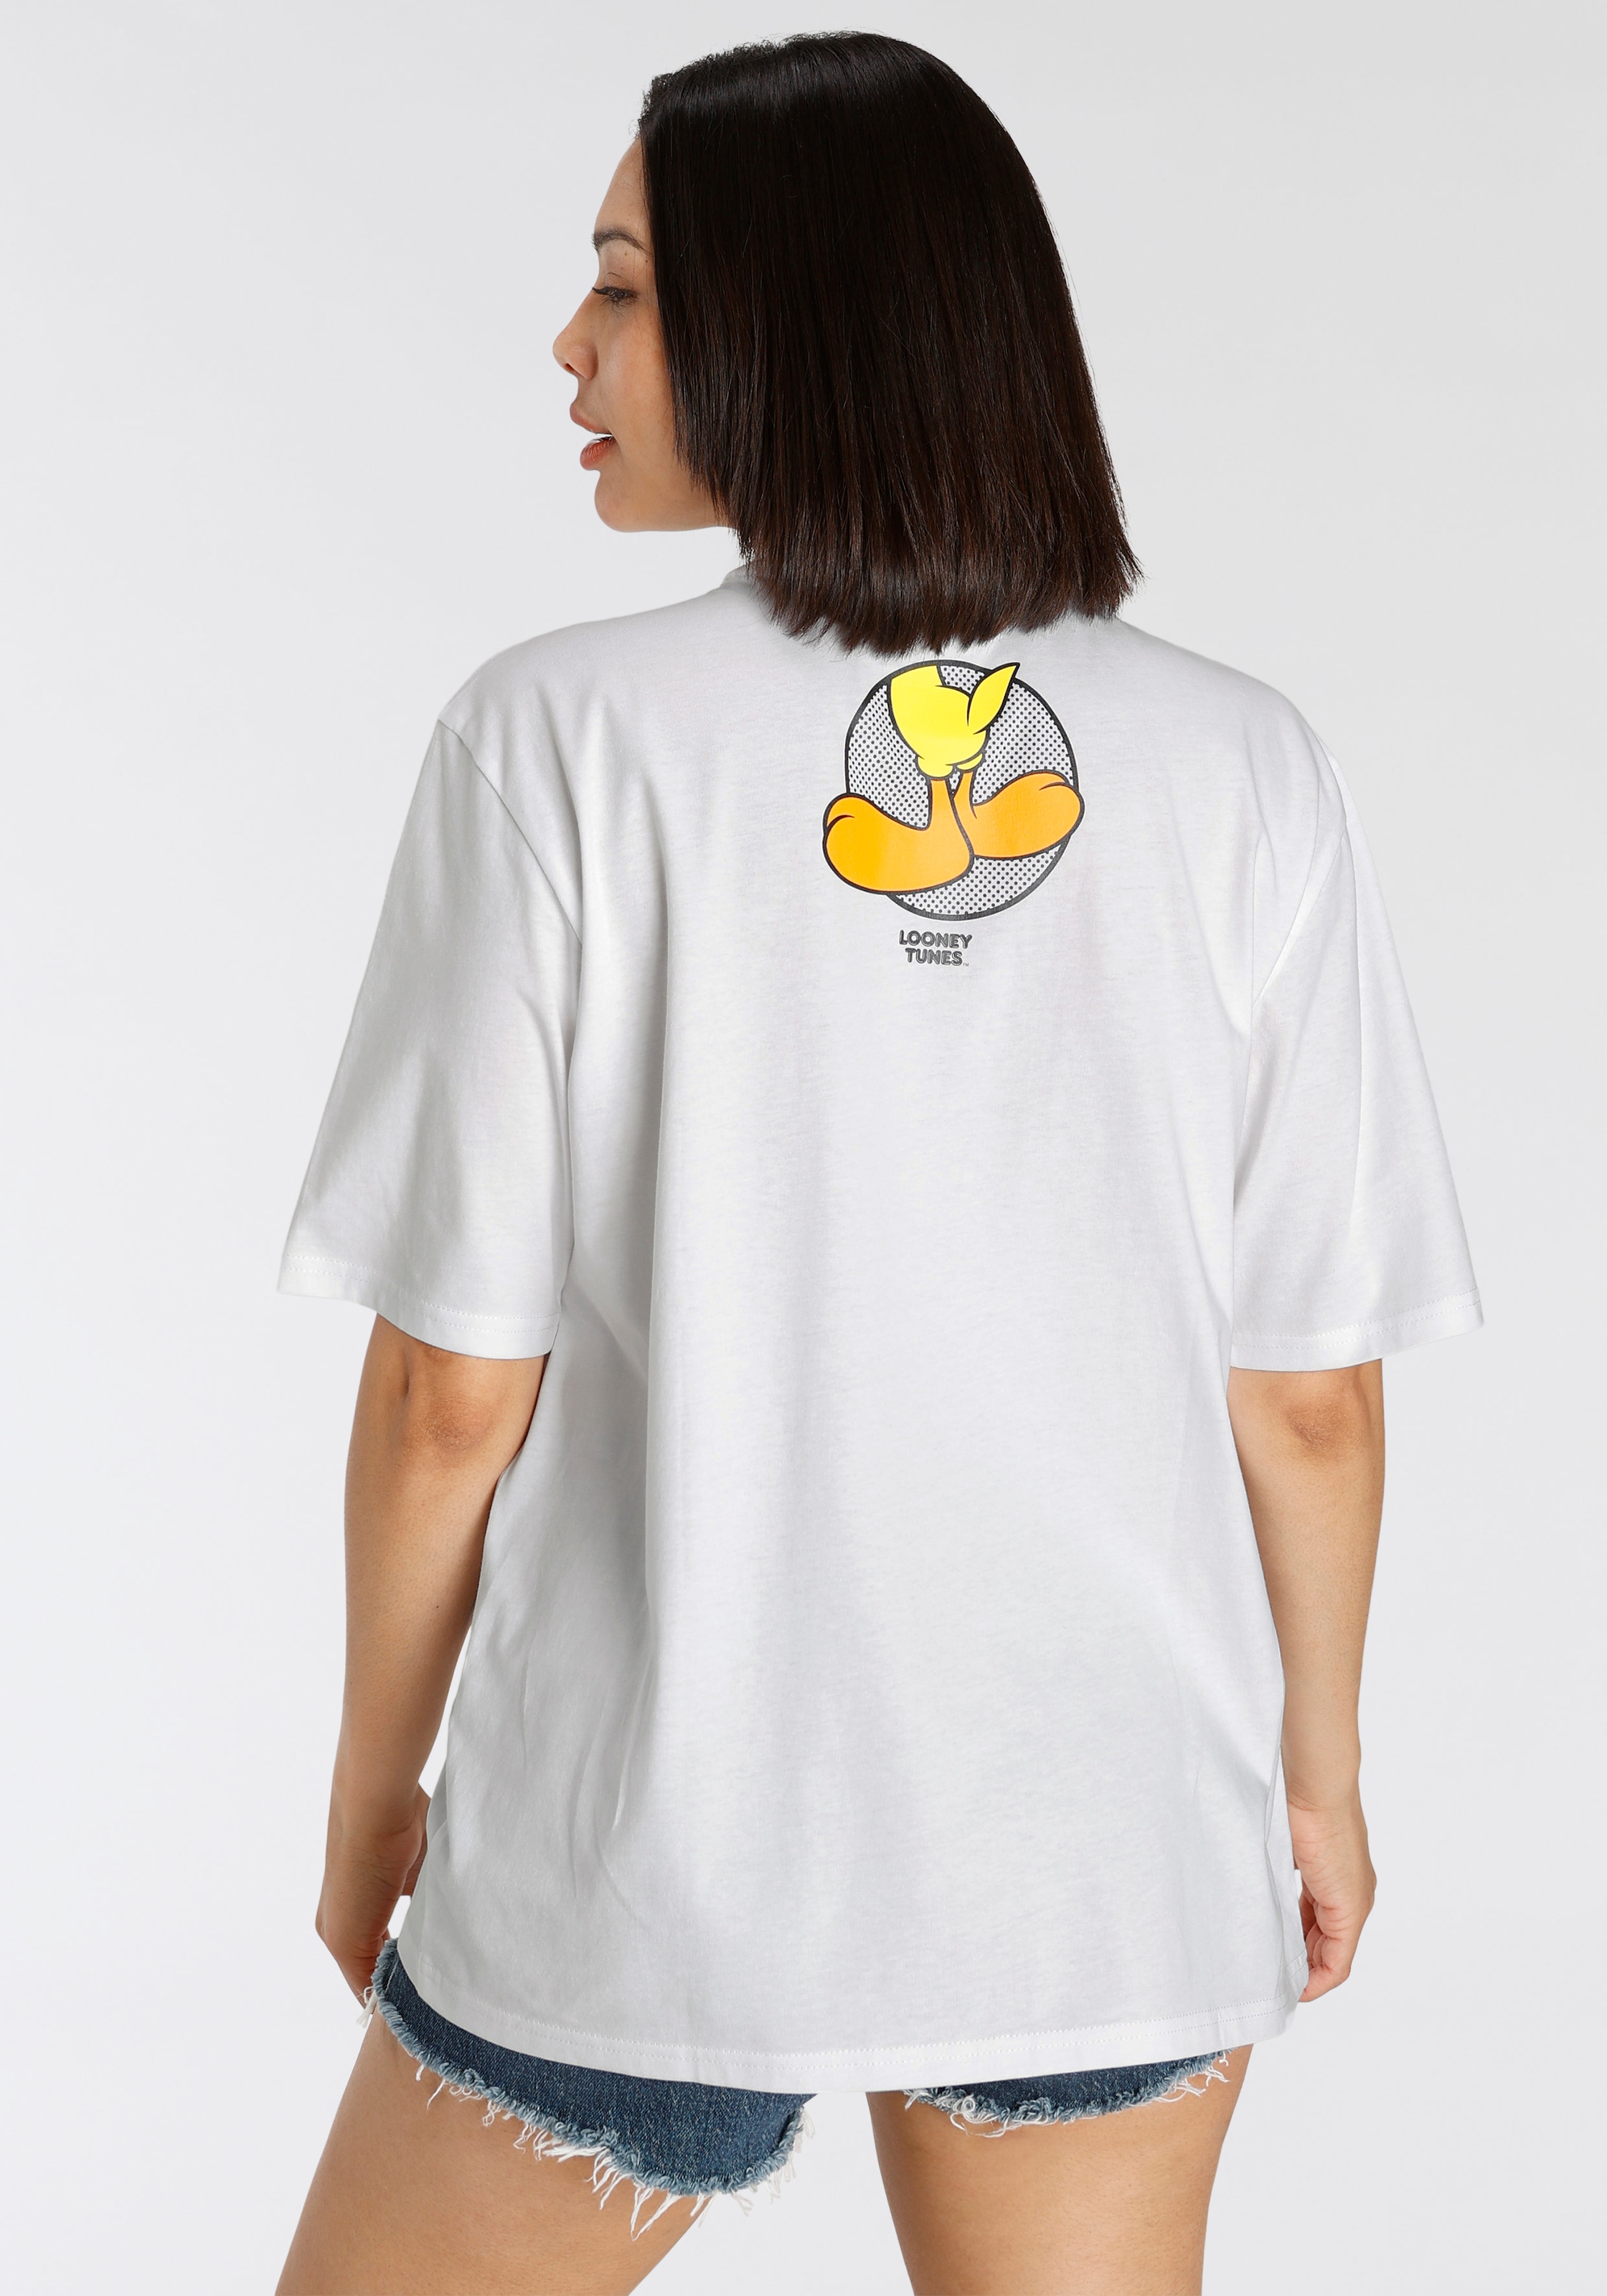 Capelli New York T-Shirt, Tweety T-Shirt